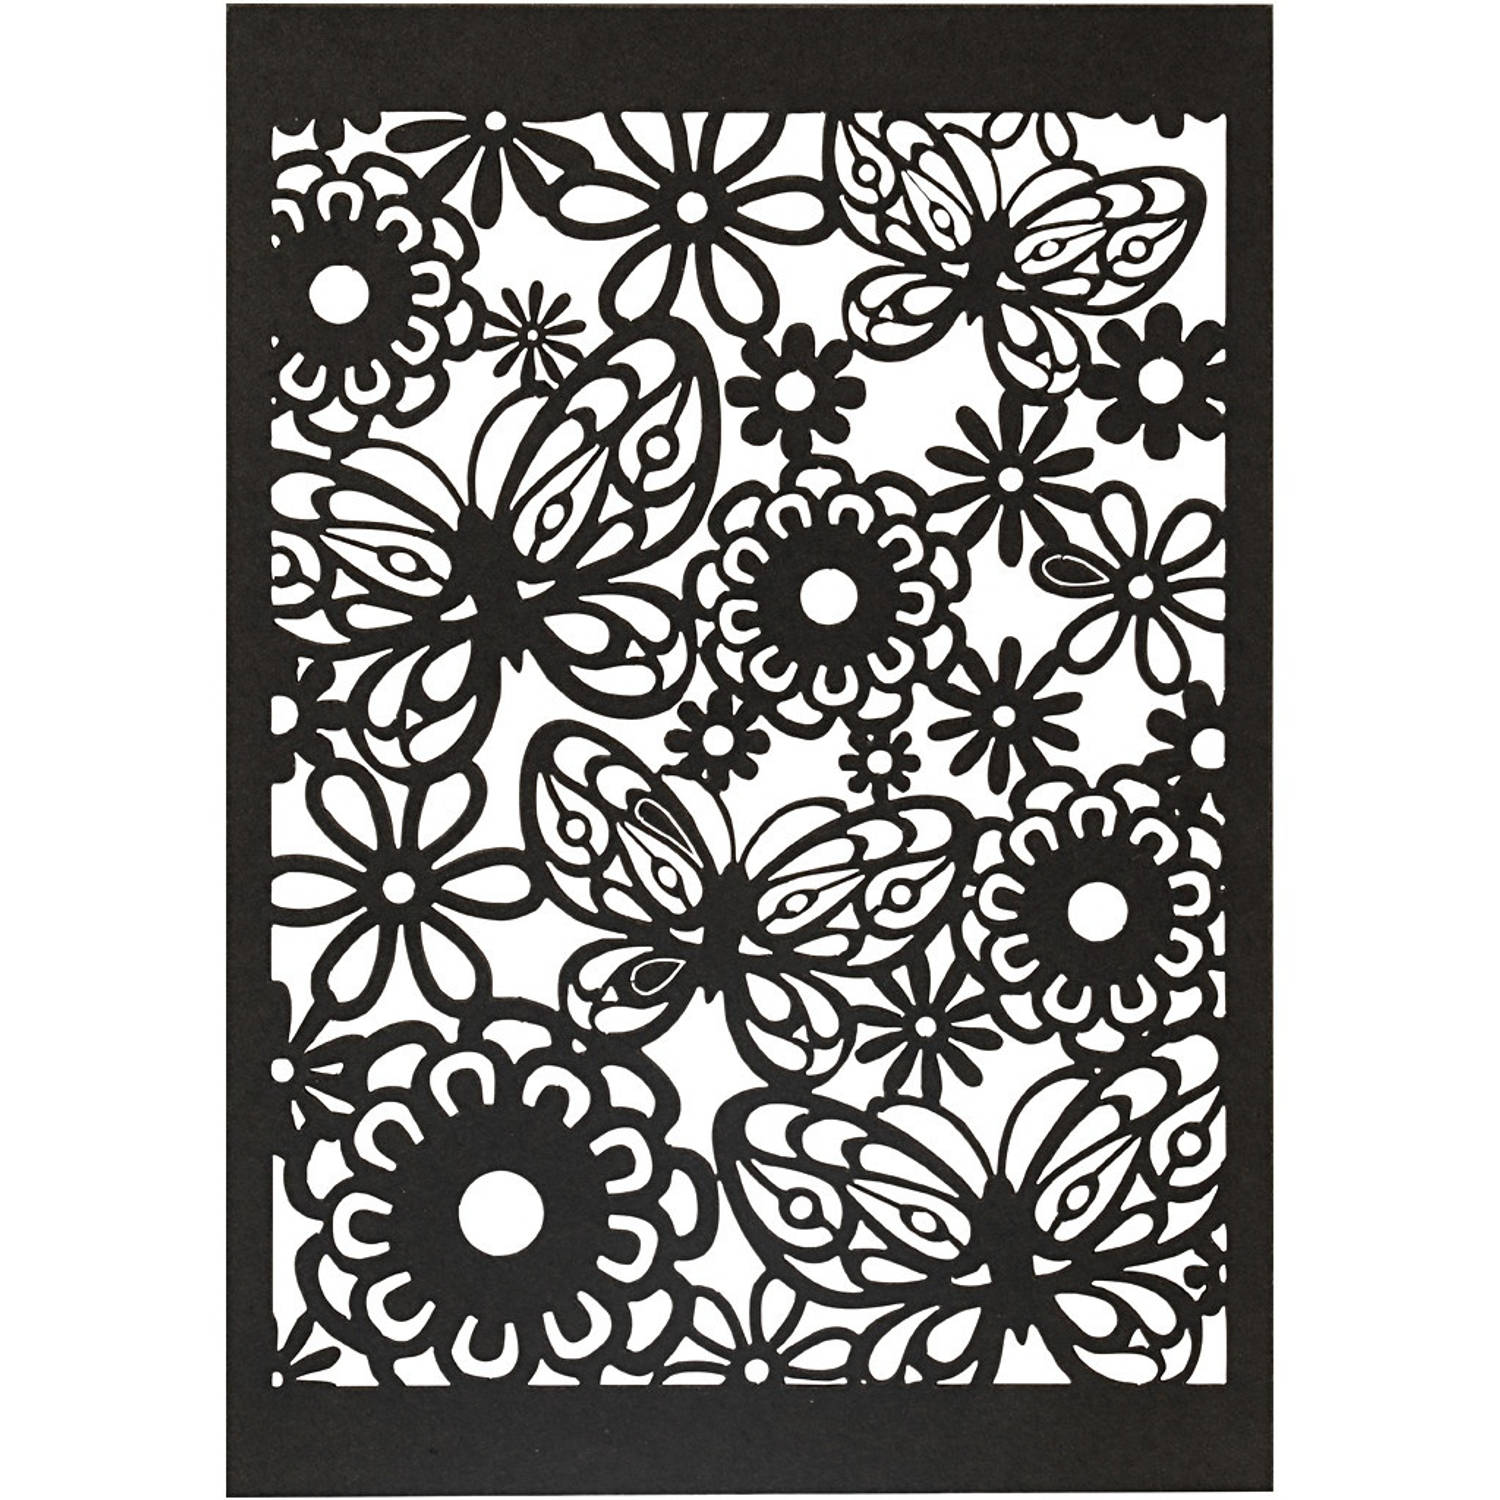 Creotime patroonkarton 10,5 x 14,8 cm 10 stuks zwart